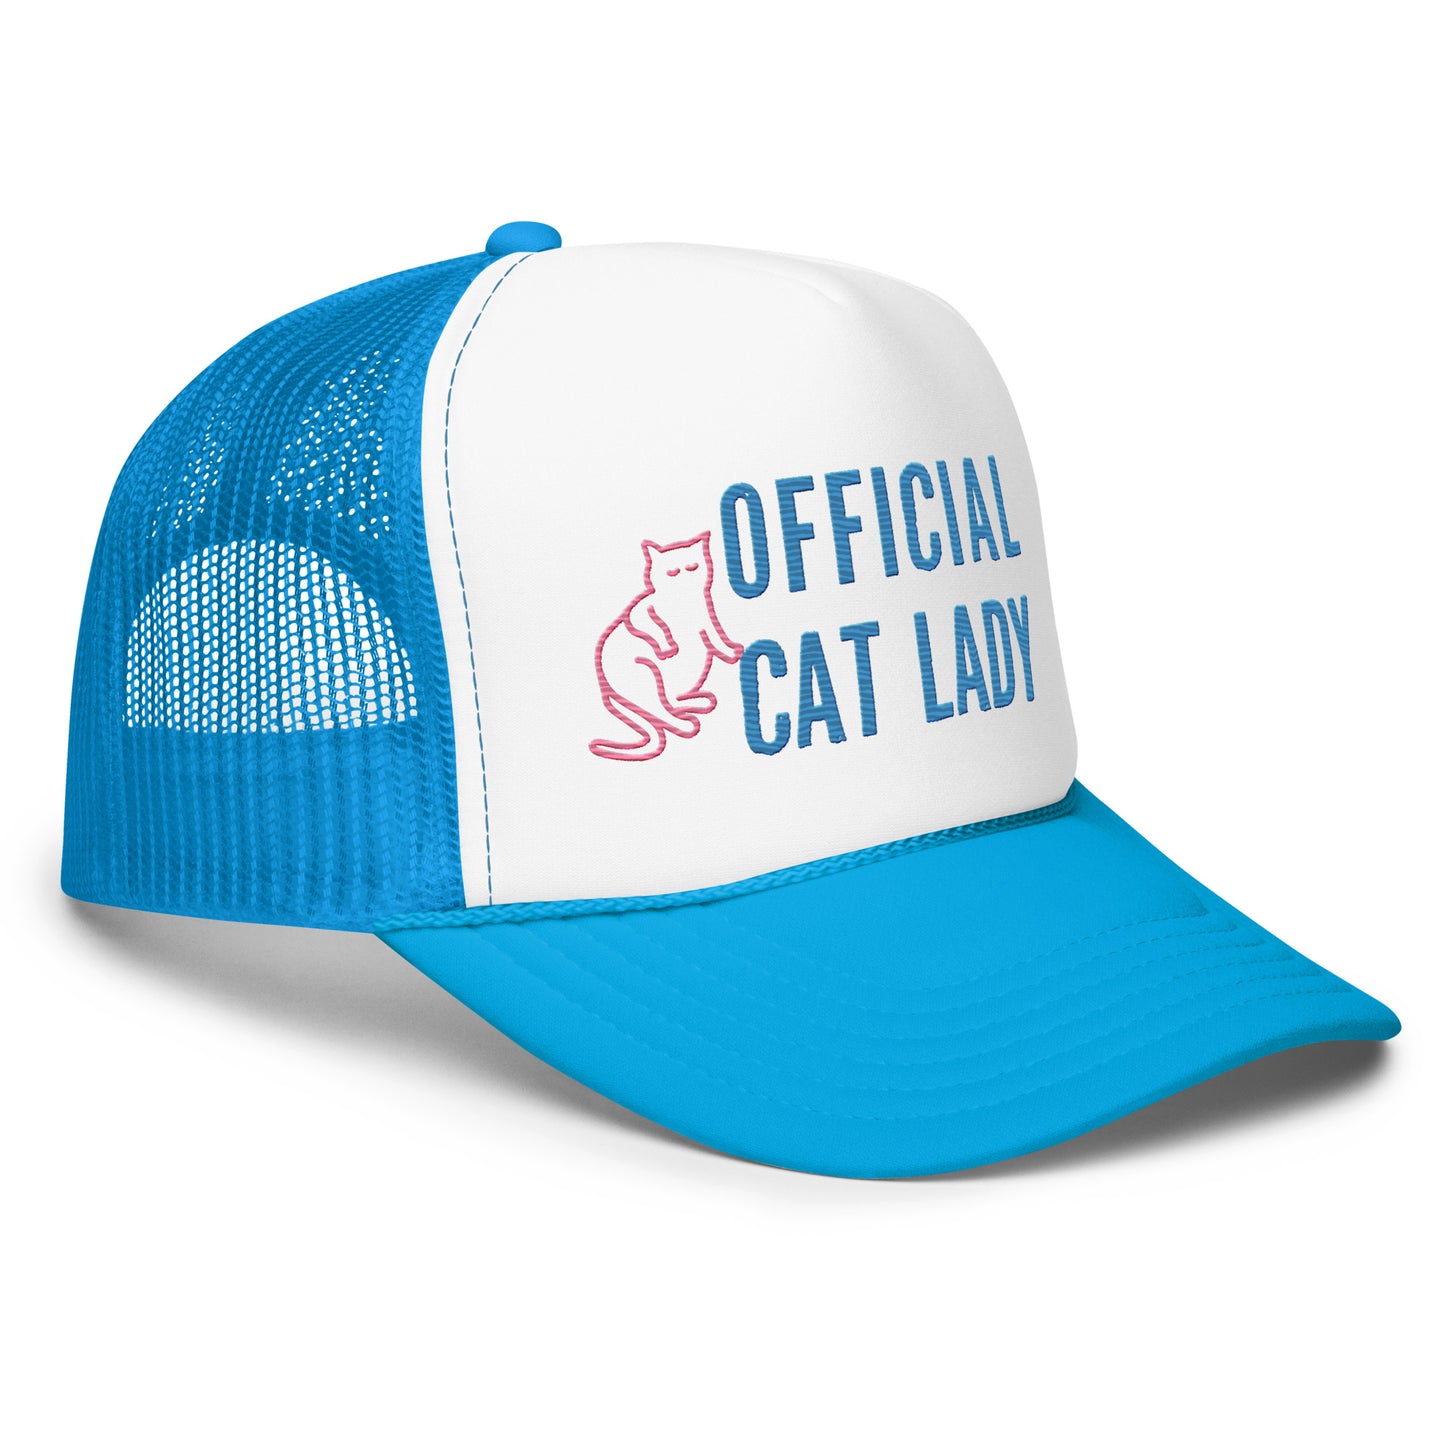 Original Official Cat Lady blue design Foam trucker hat